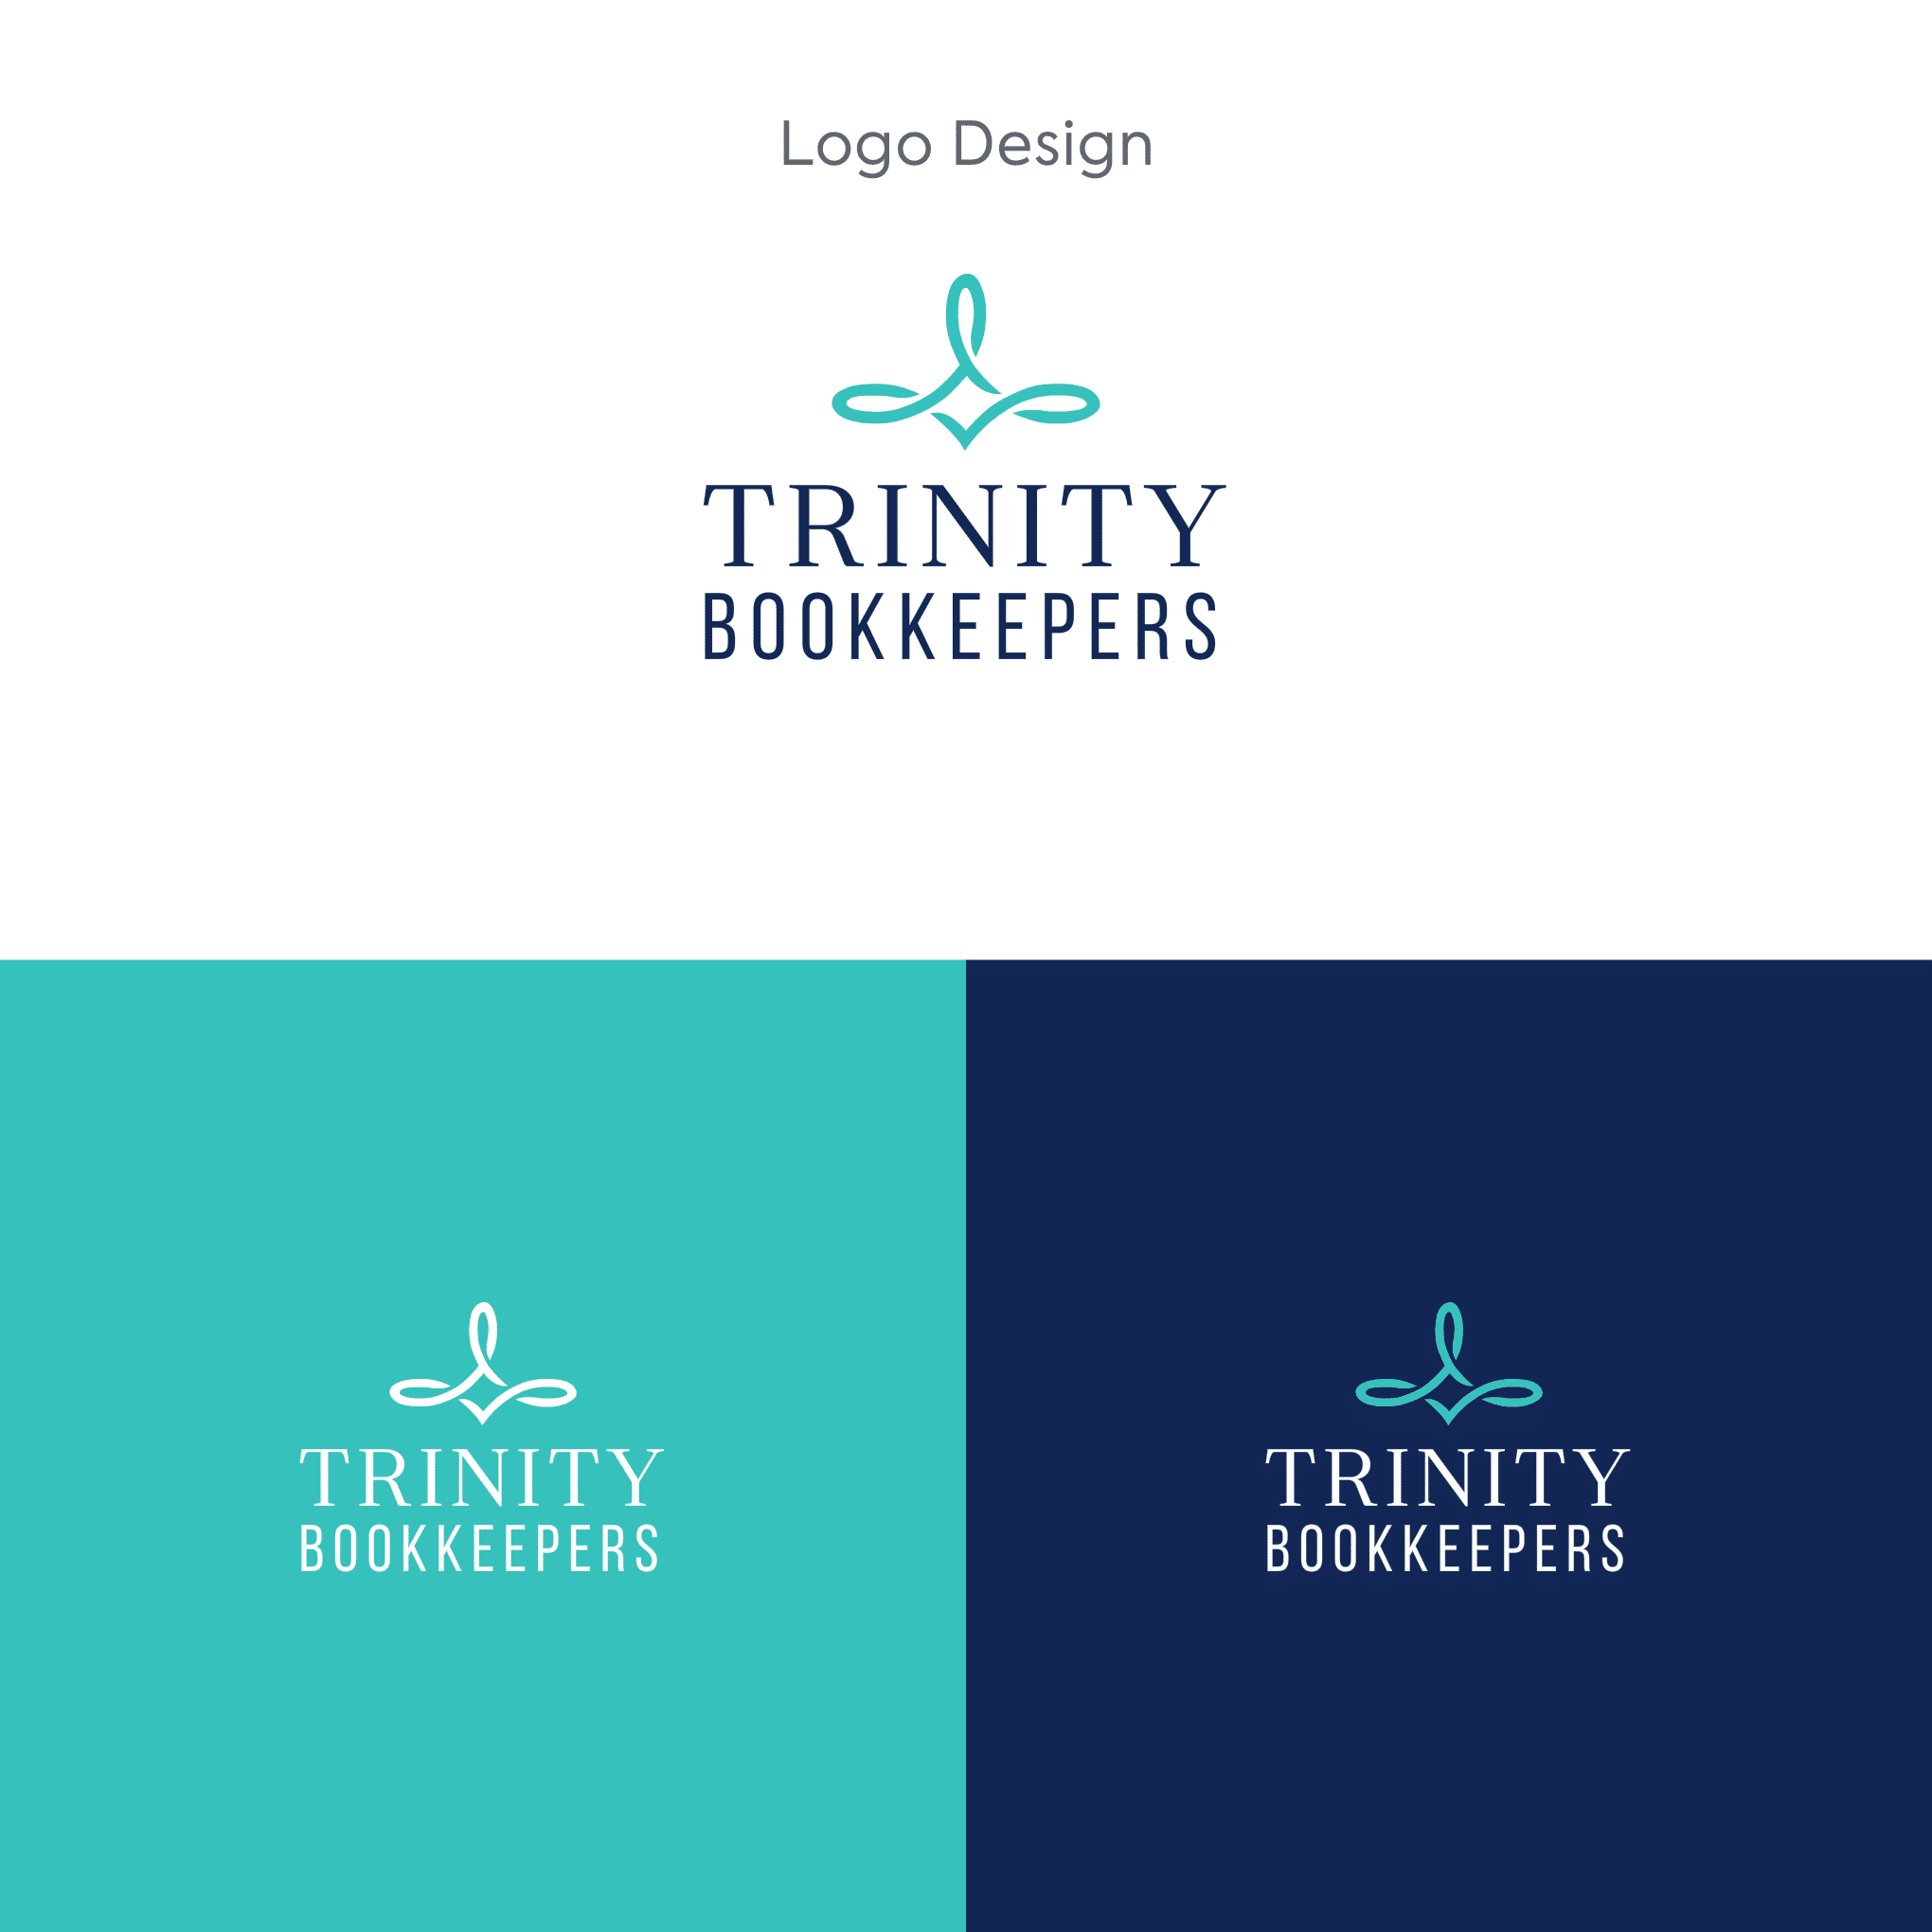 01 - Logo Design (5)